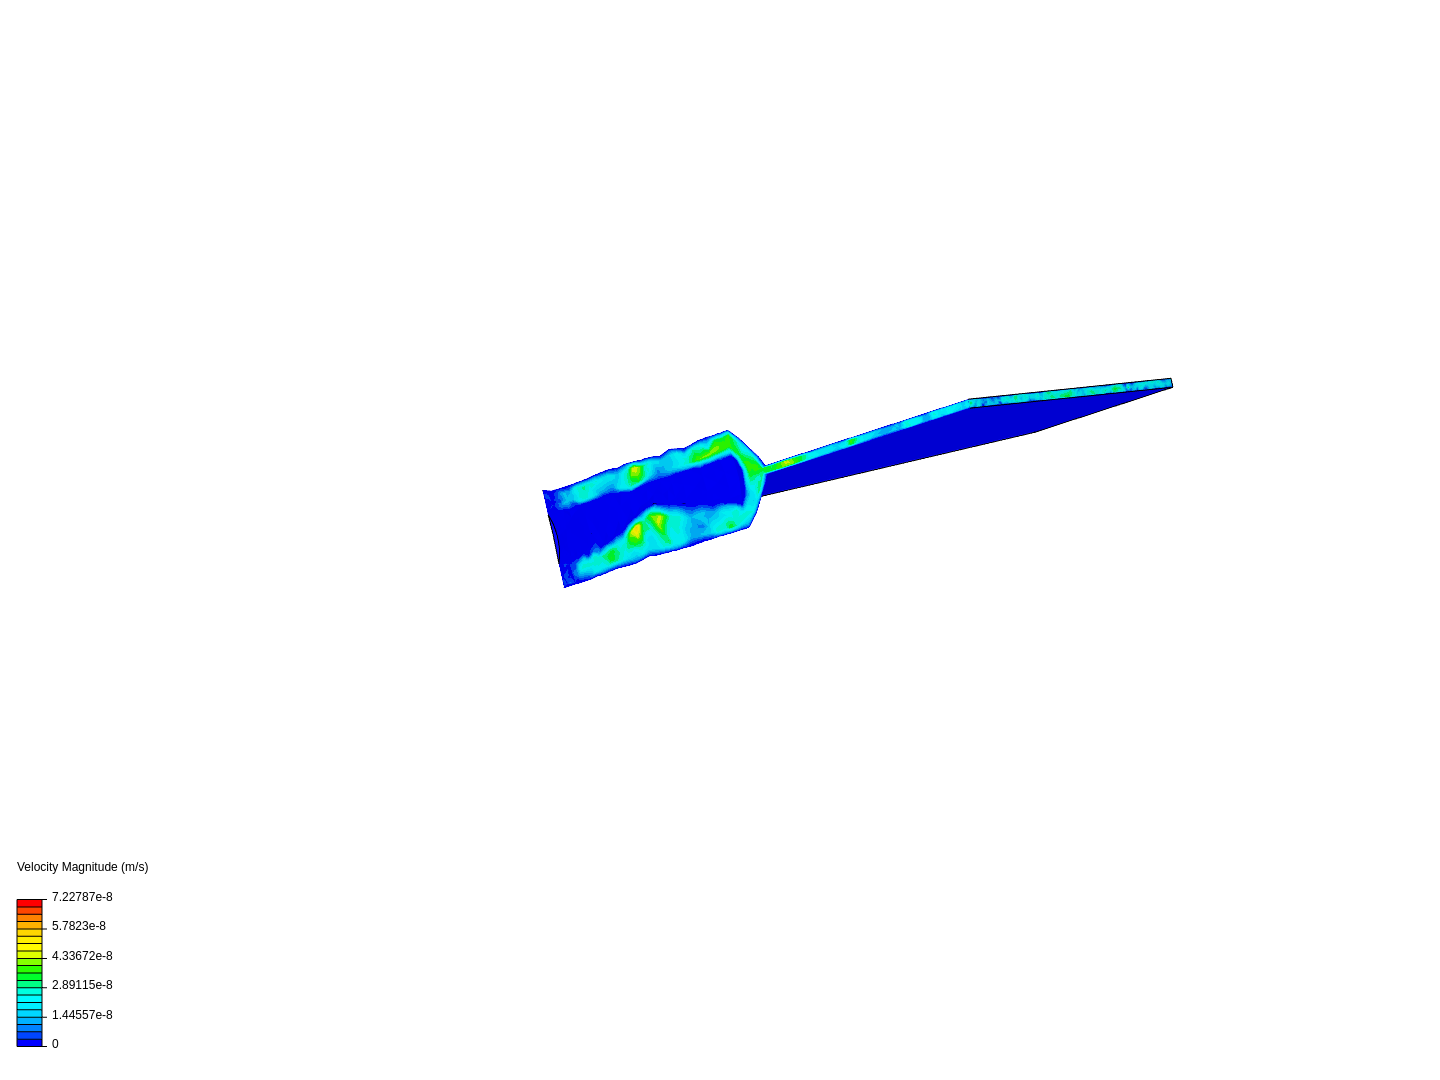 Heat exchanger Cht simulation image